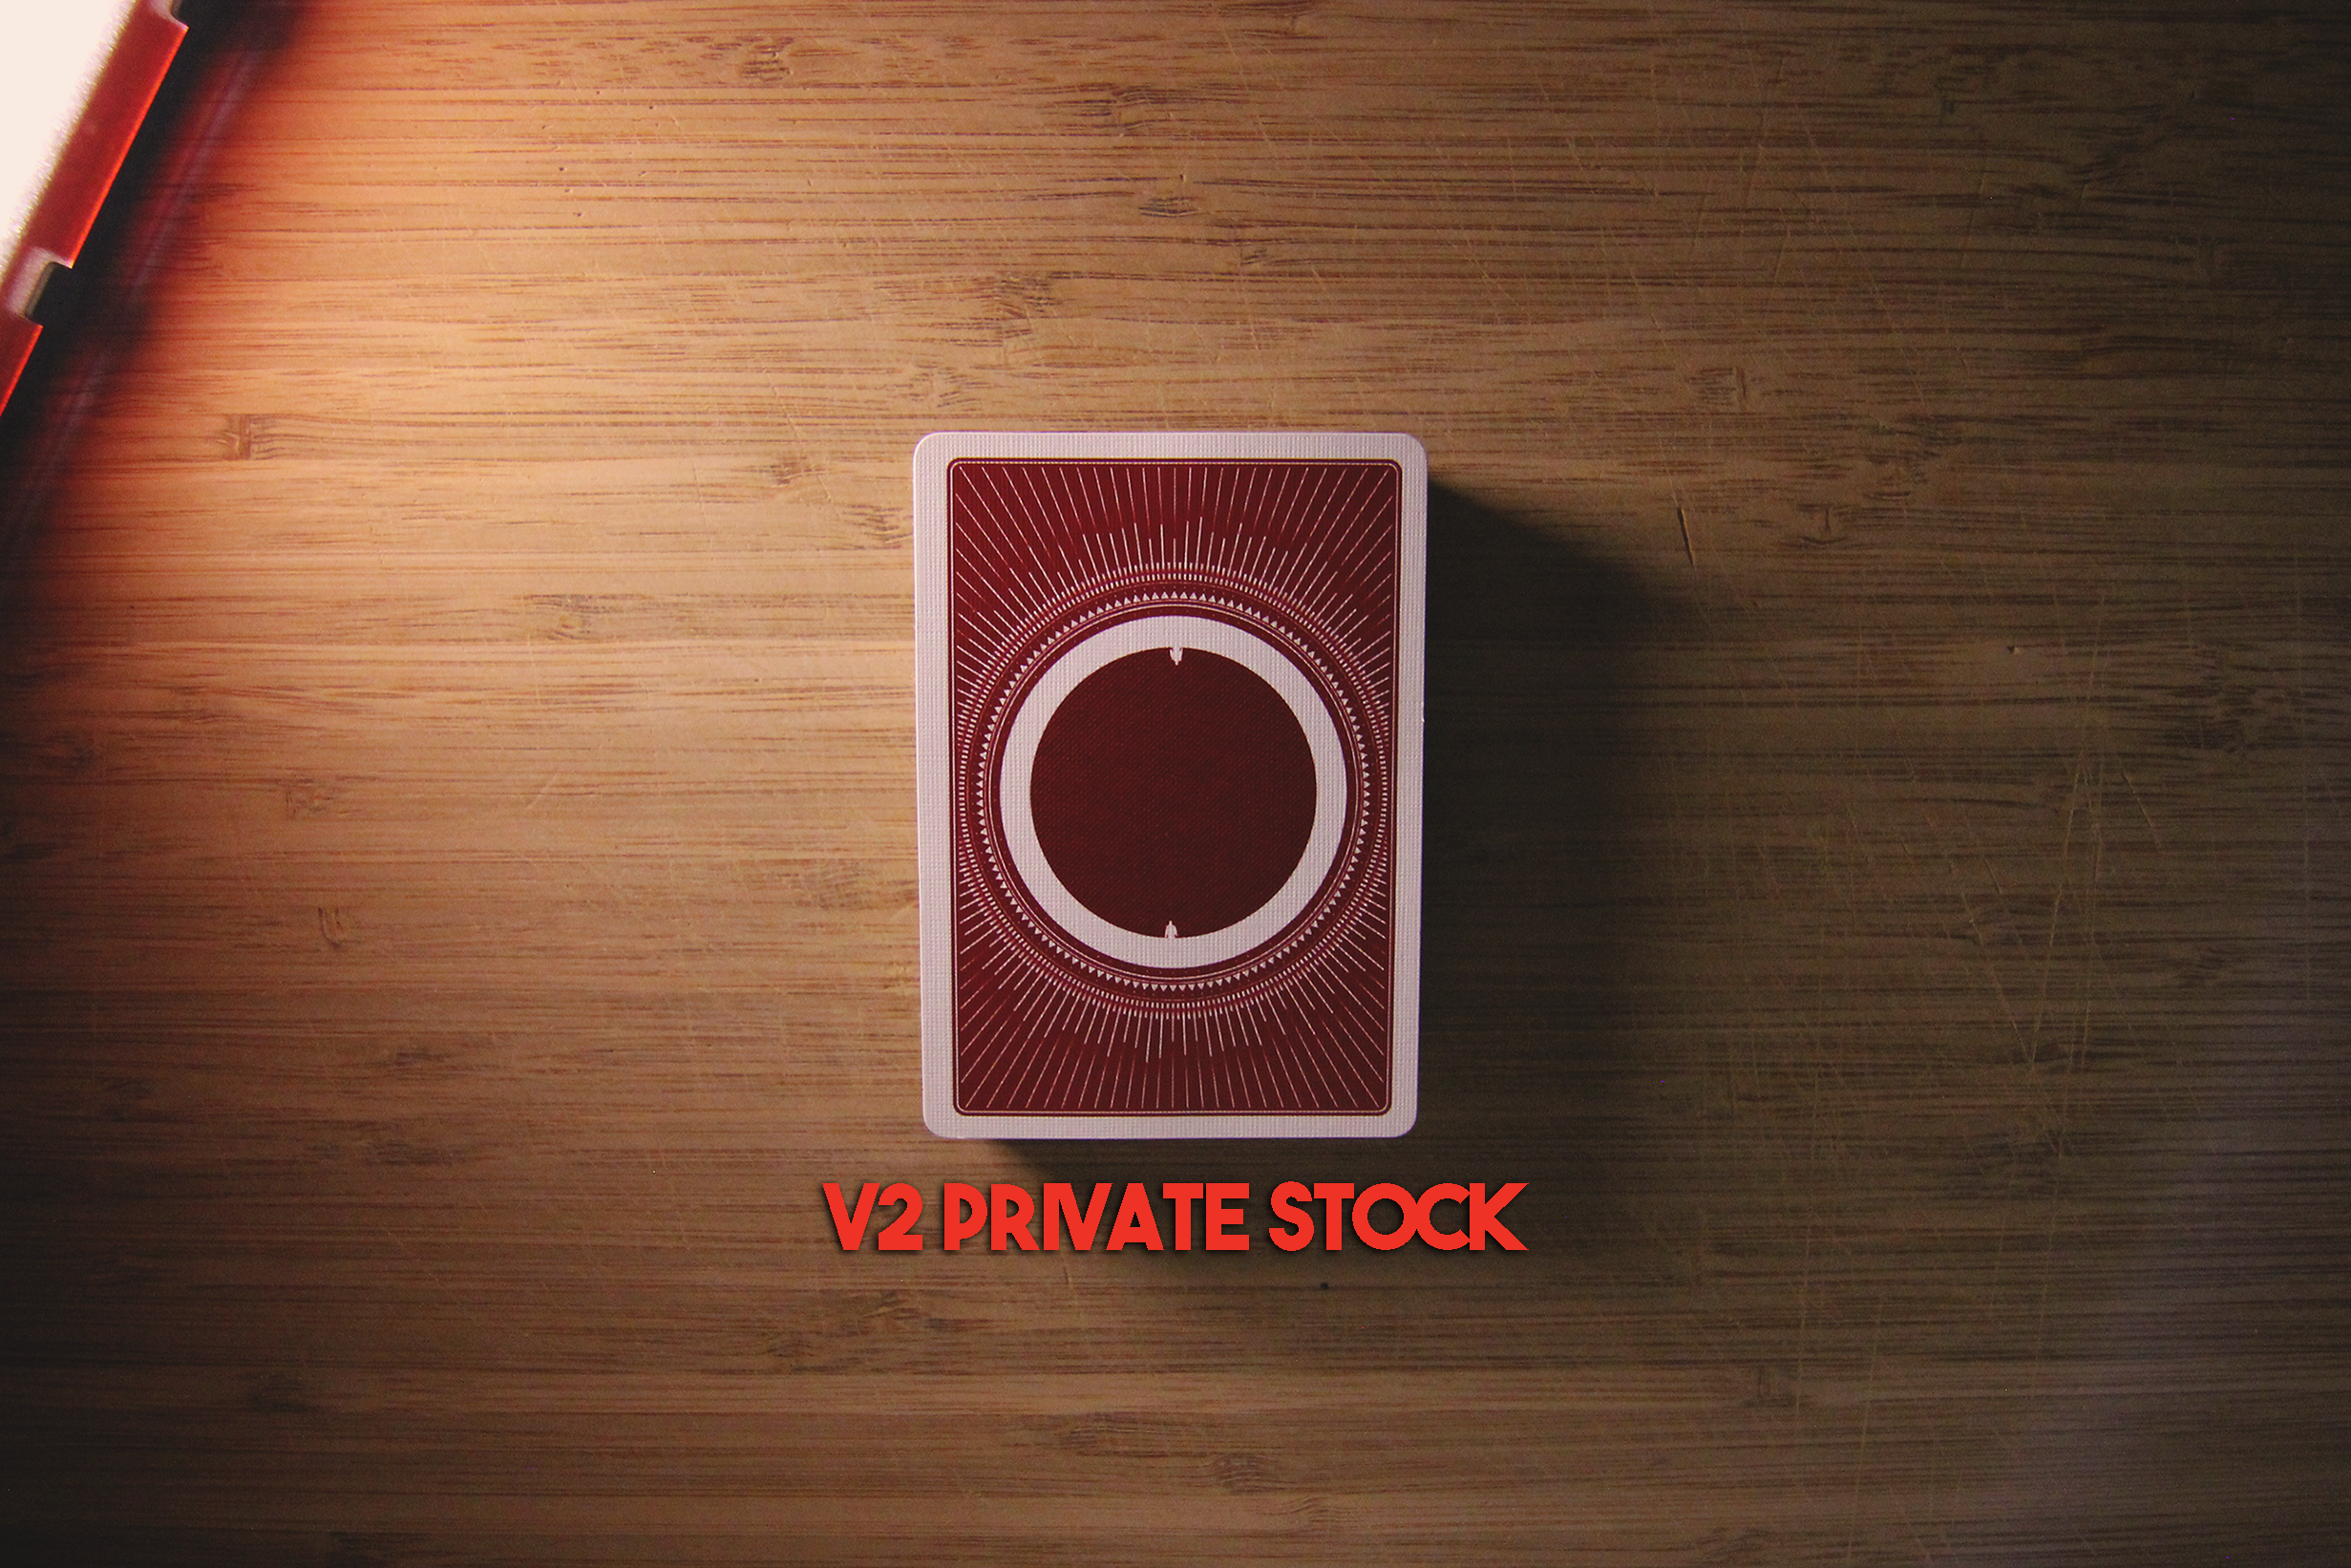 Orbit V2 - (Private stock, Ultra Rare) - 8 PM PST